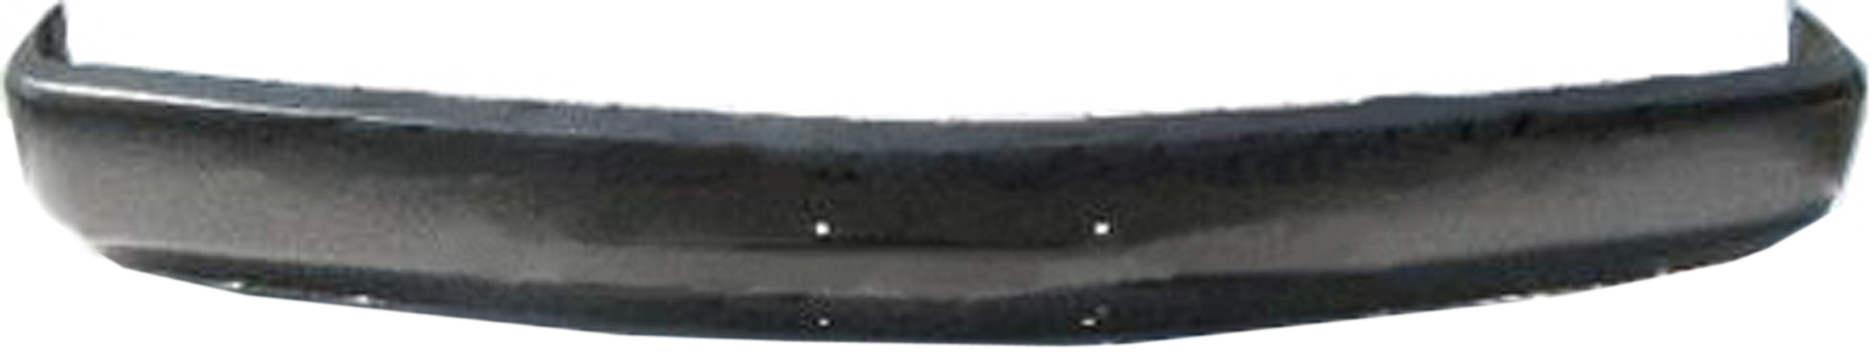 Aftermarket METAL FRONT BUMPERS for GMC - K1500, K1500,88-99,Front bumper face bar